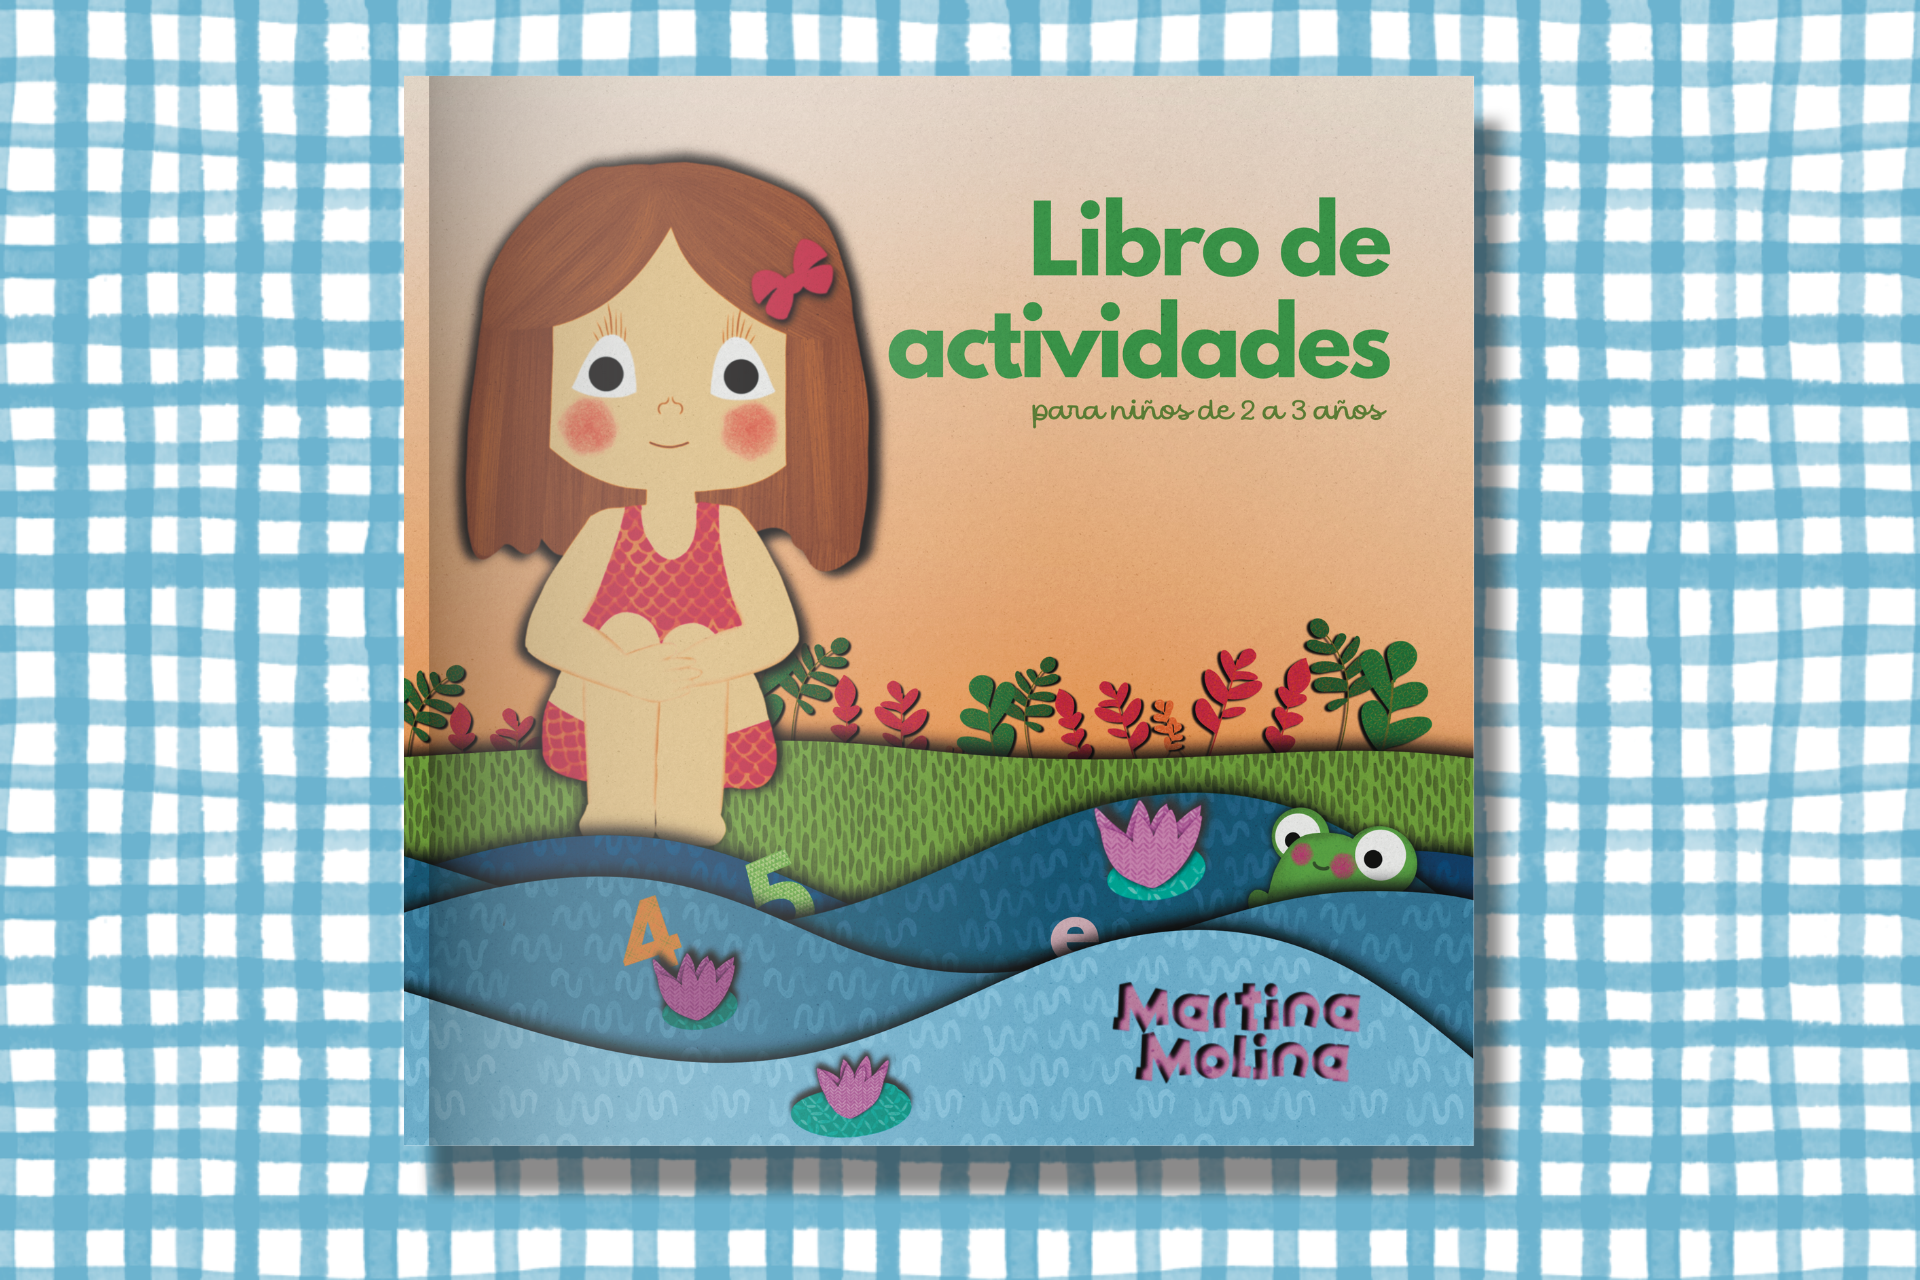 Libro de actividades para niños de 2 a 3 años – libros infantiles